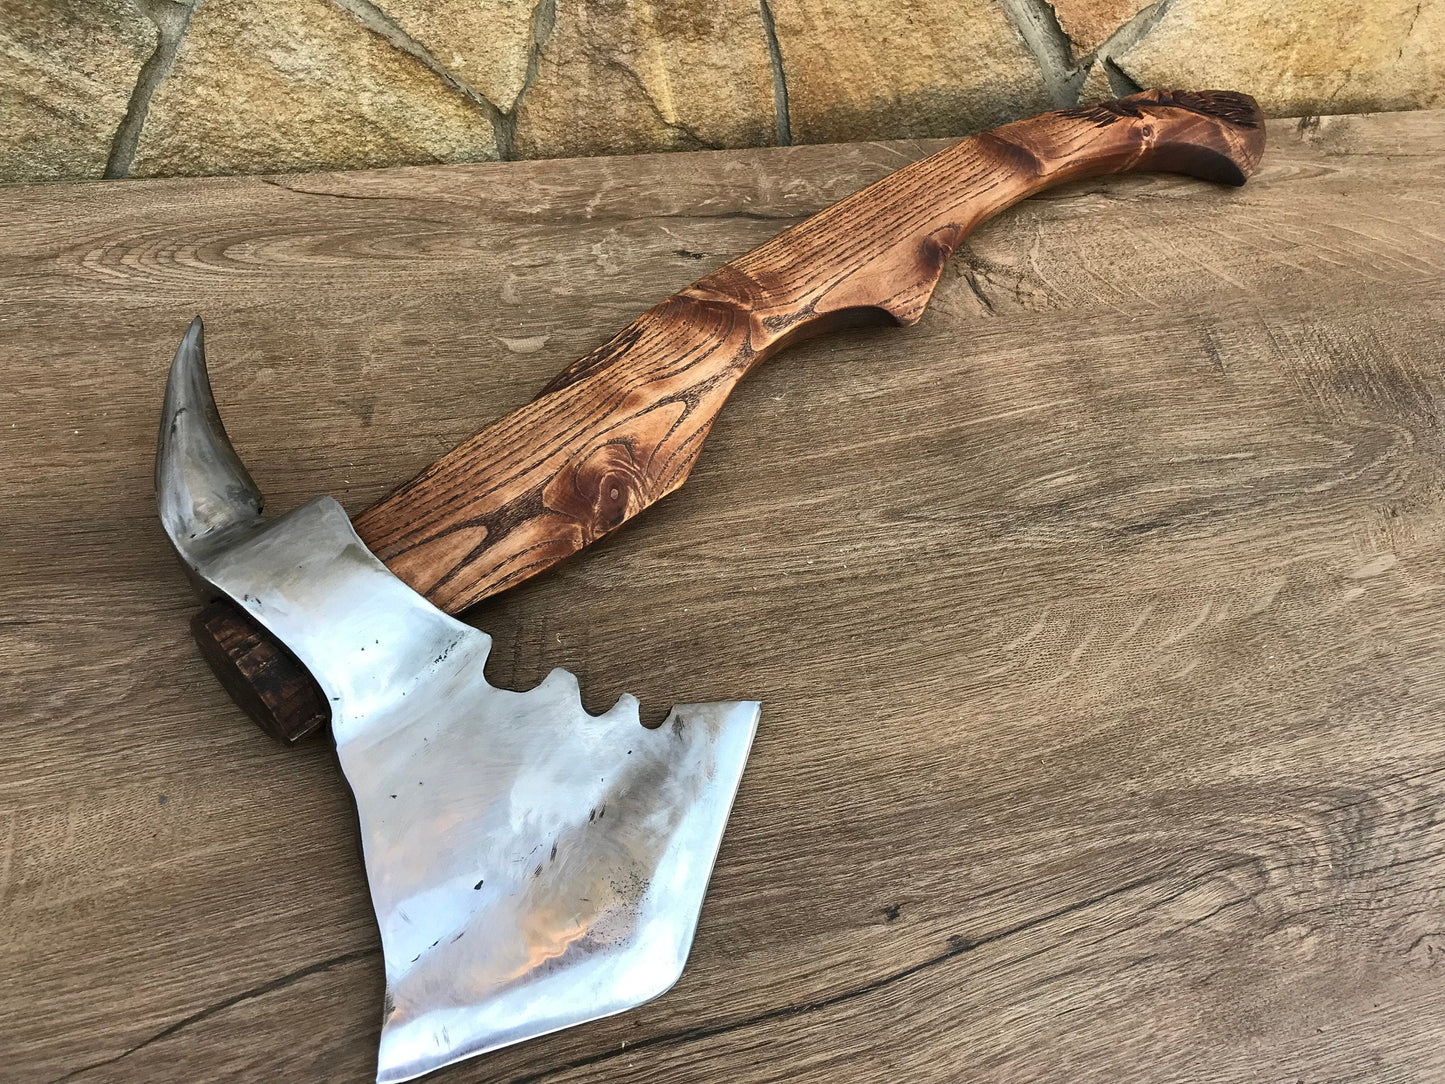 Viking axe, hunting axe, hatchet, bearded axe, mens gift, engraved axe, hatchet axe tool, steel axe, best man axe gift, camping axe,axe gift